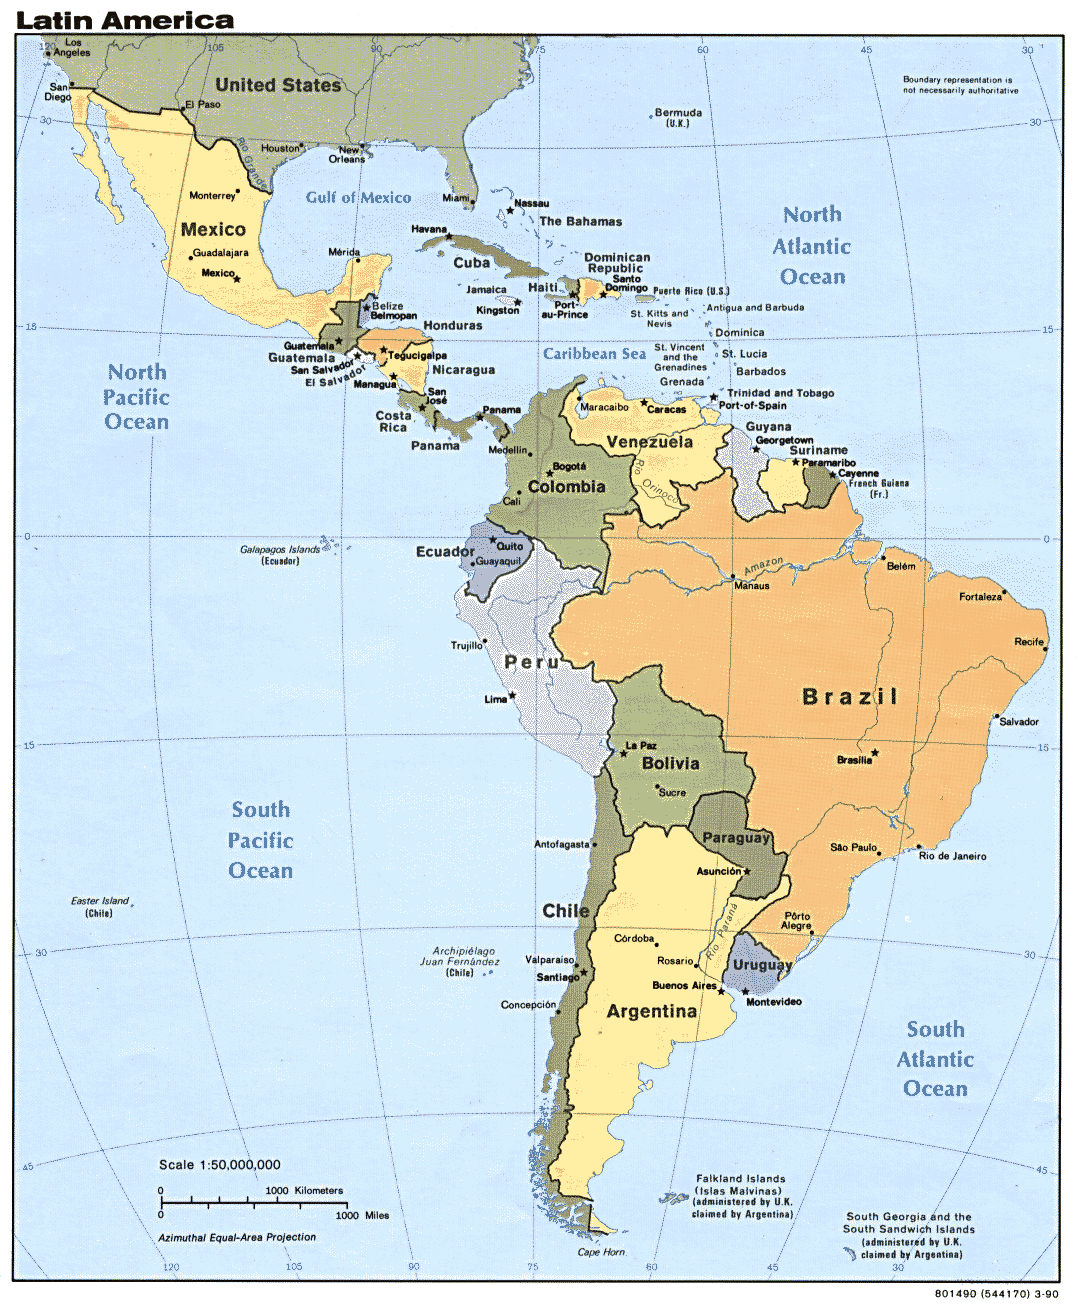 Maps of Latin America - LANIC